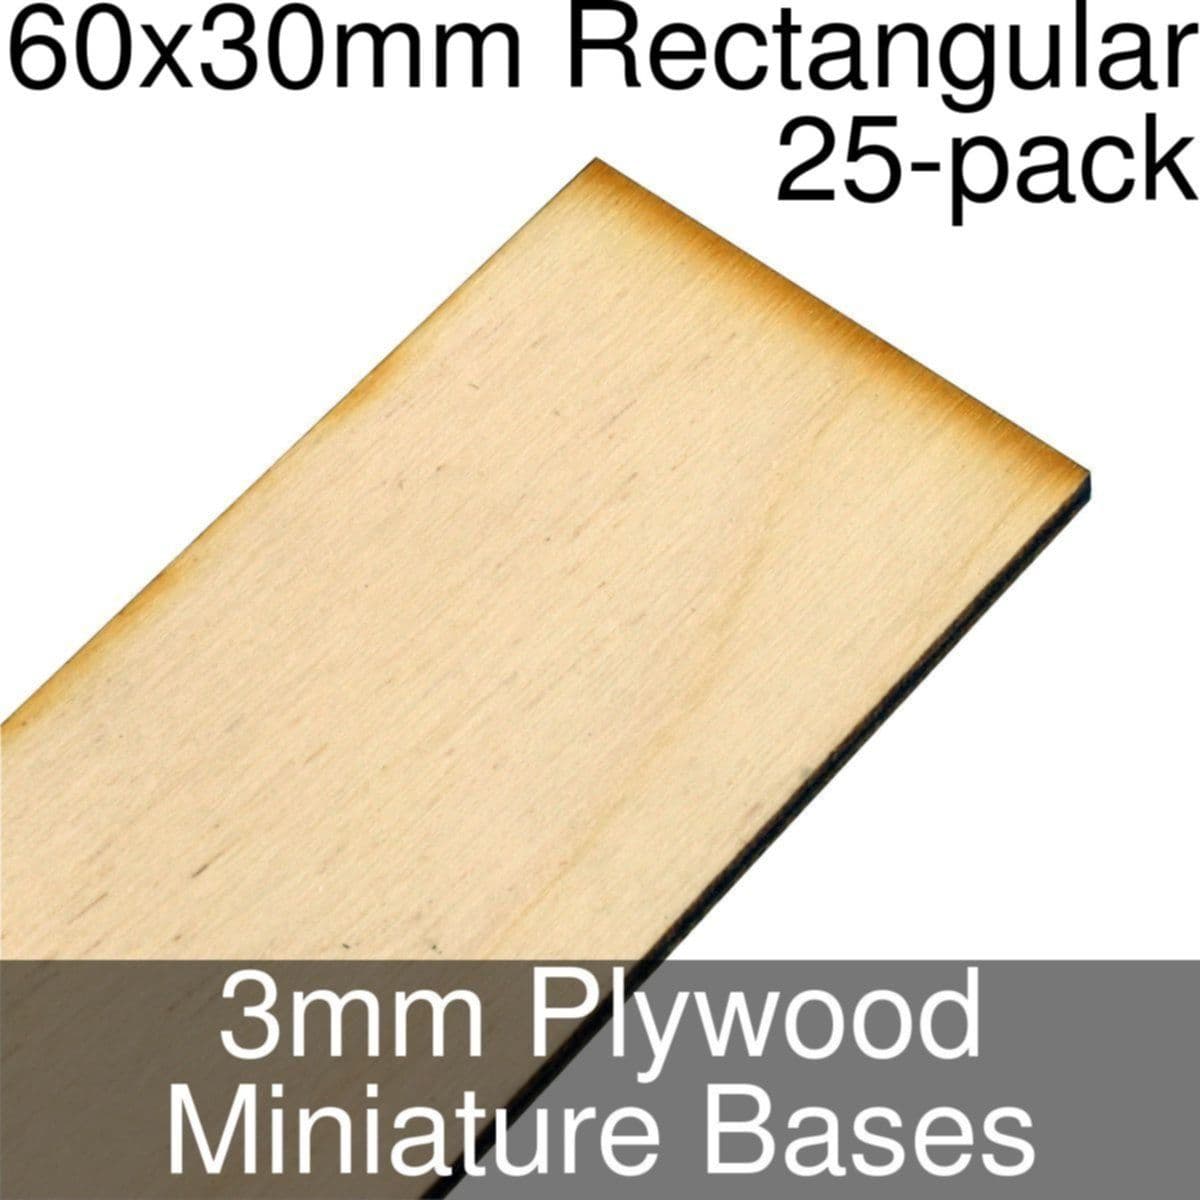 Miniature Bases, Rectangular, 60x30mm, 3mm Plywood (25)